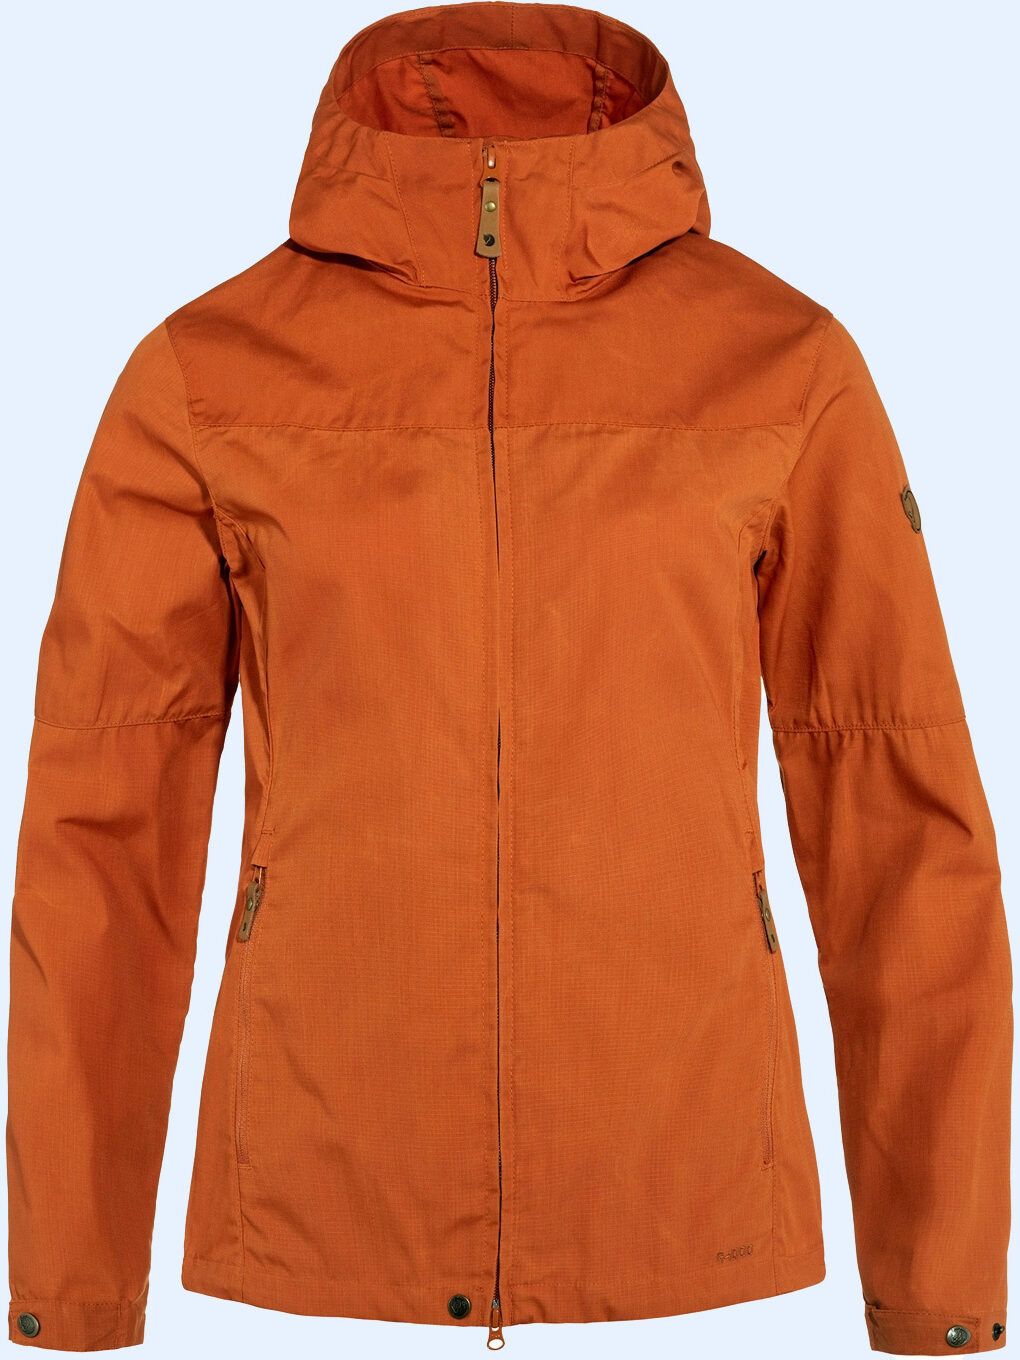 A women's orange jacket with hood.